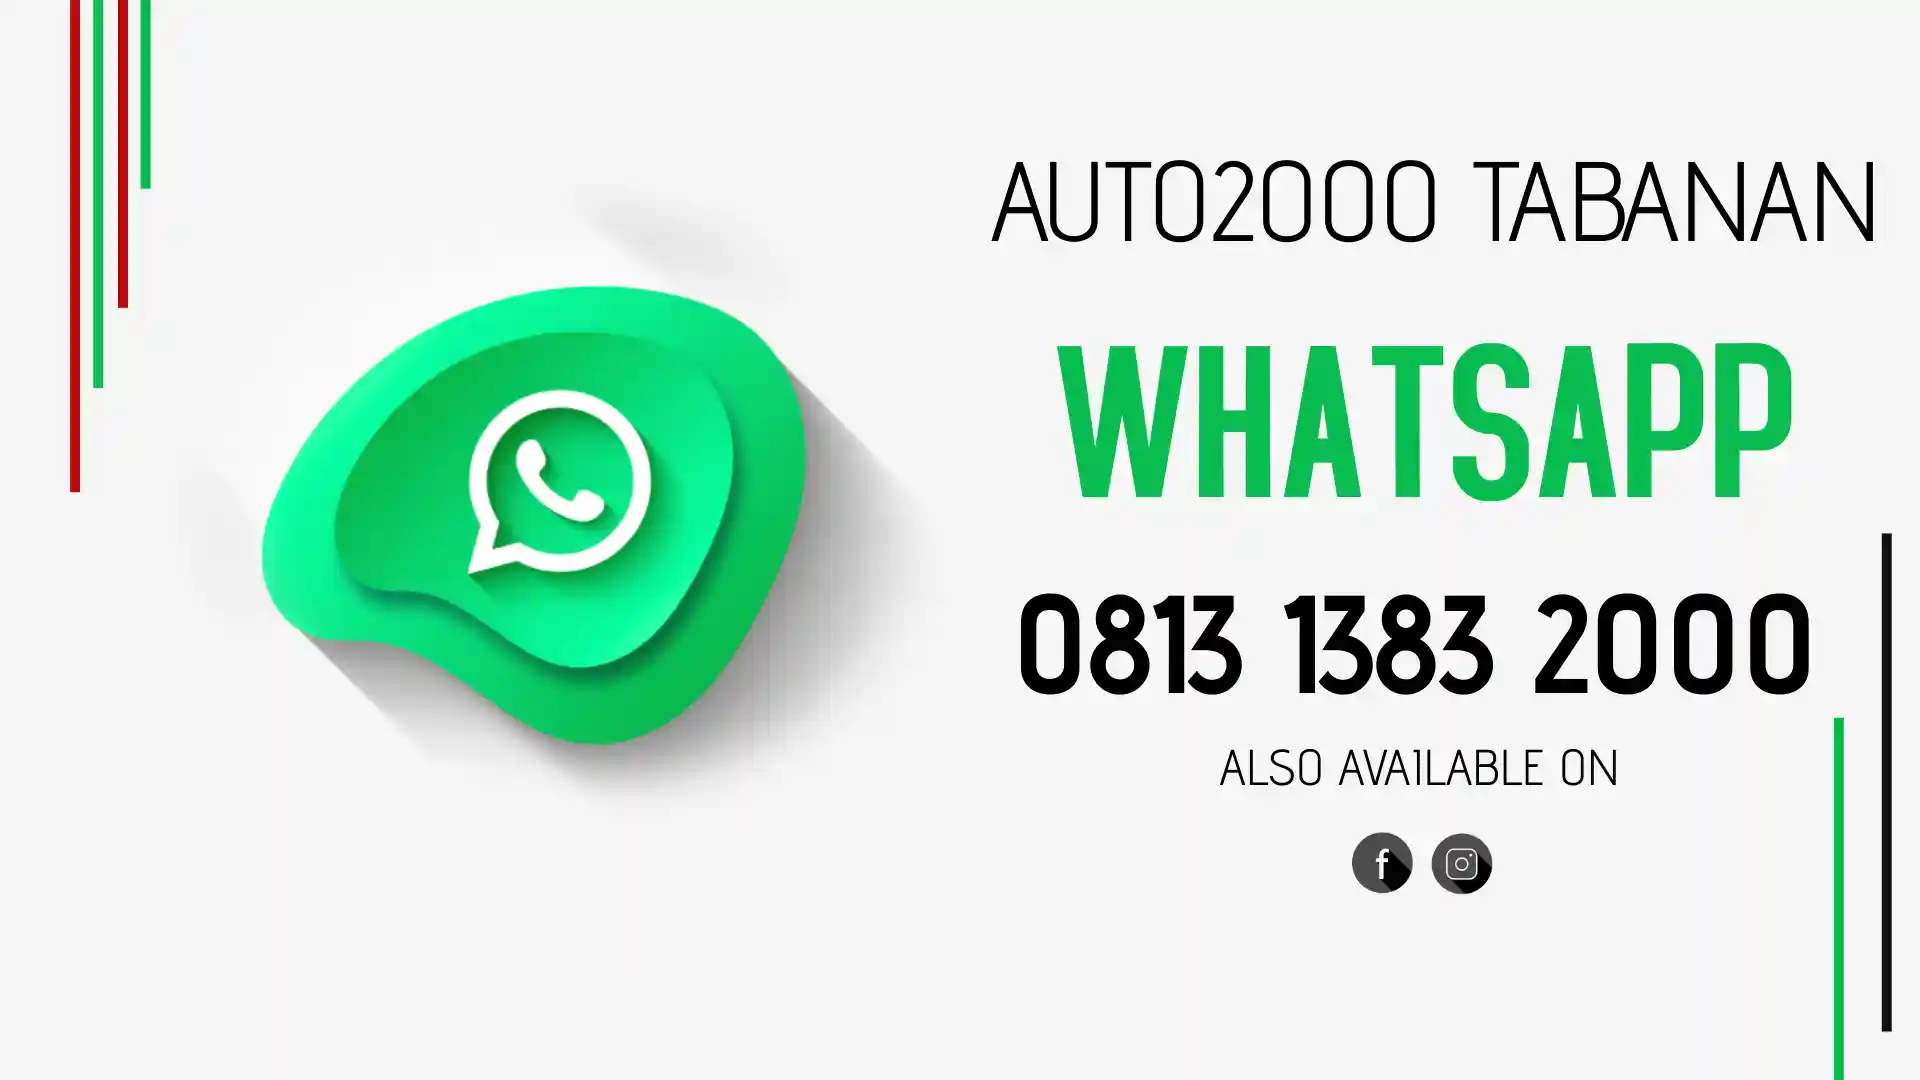 Find Us On  Whatapp Auto2000 Tabanan.webp